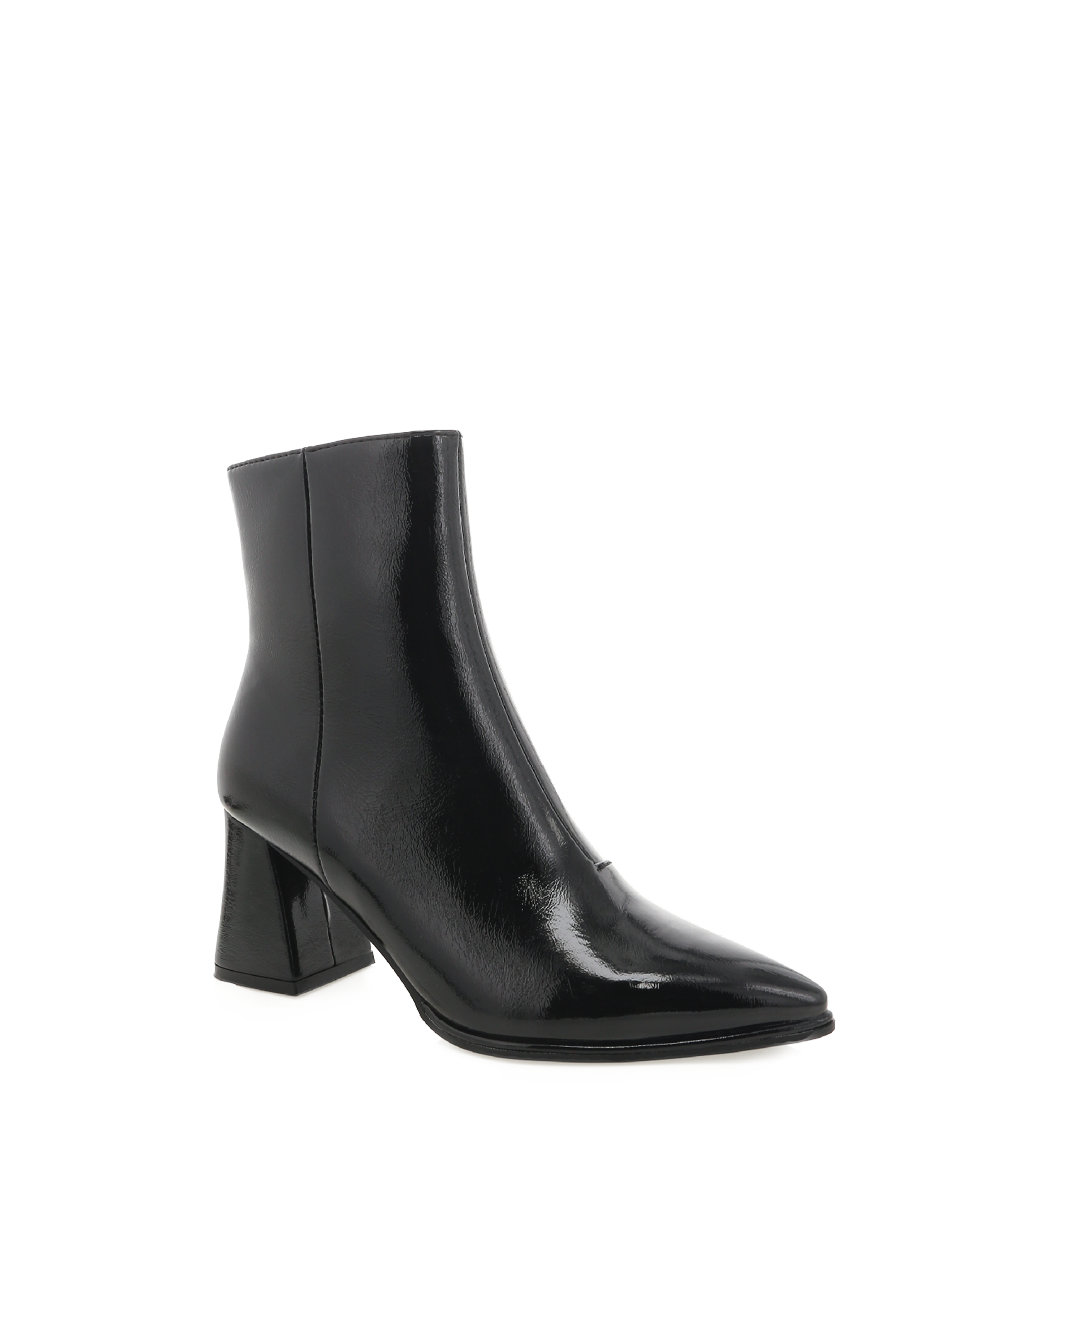 CADEN - BLACK CRINKLE PATENT-Boots-Billini-BILLINI USA